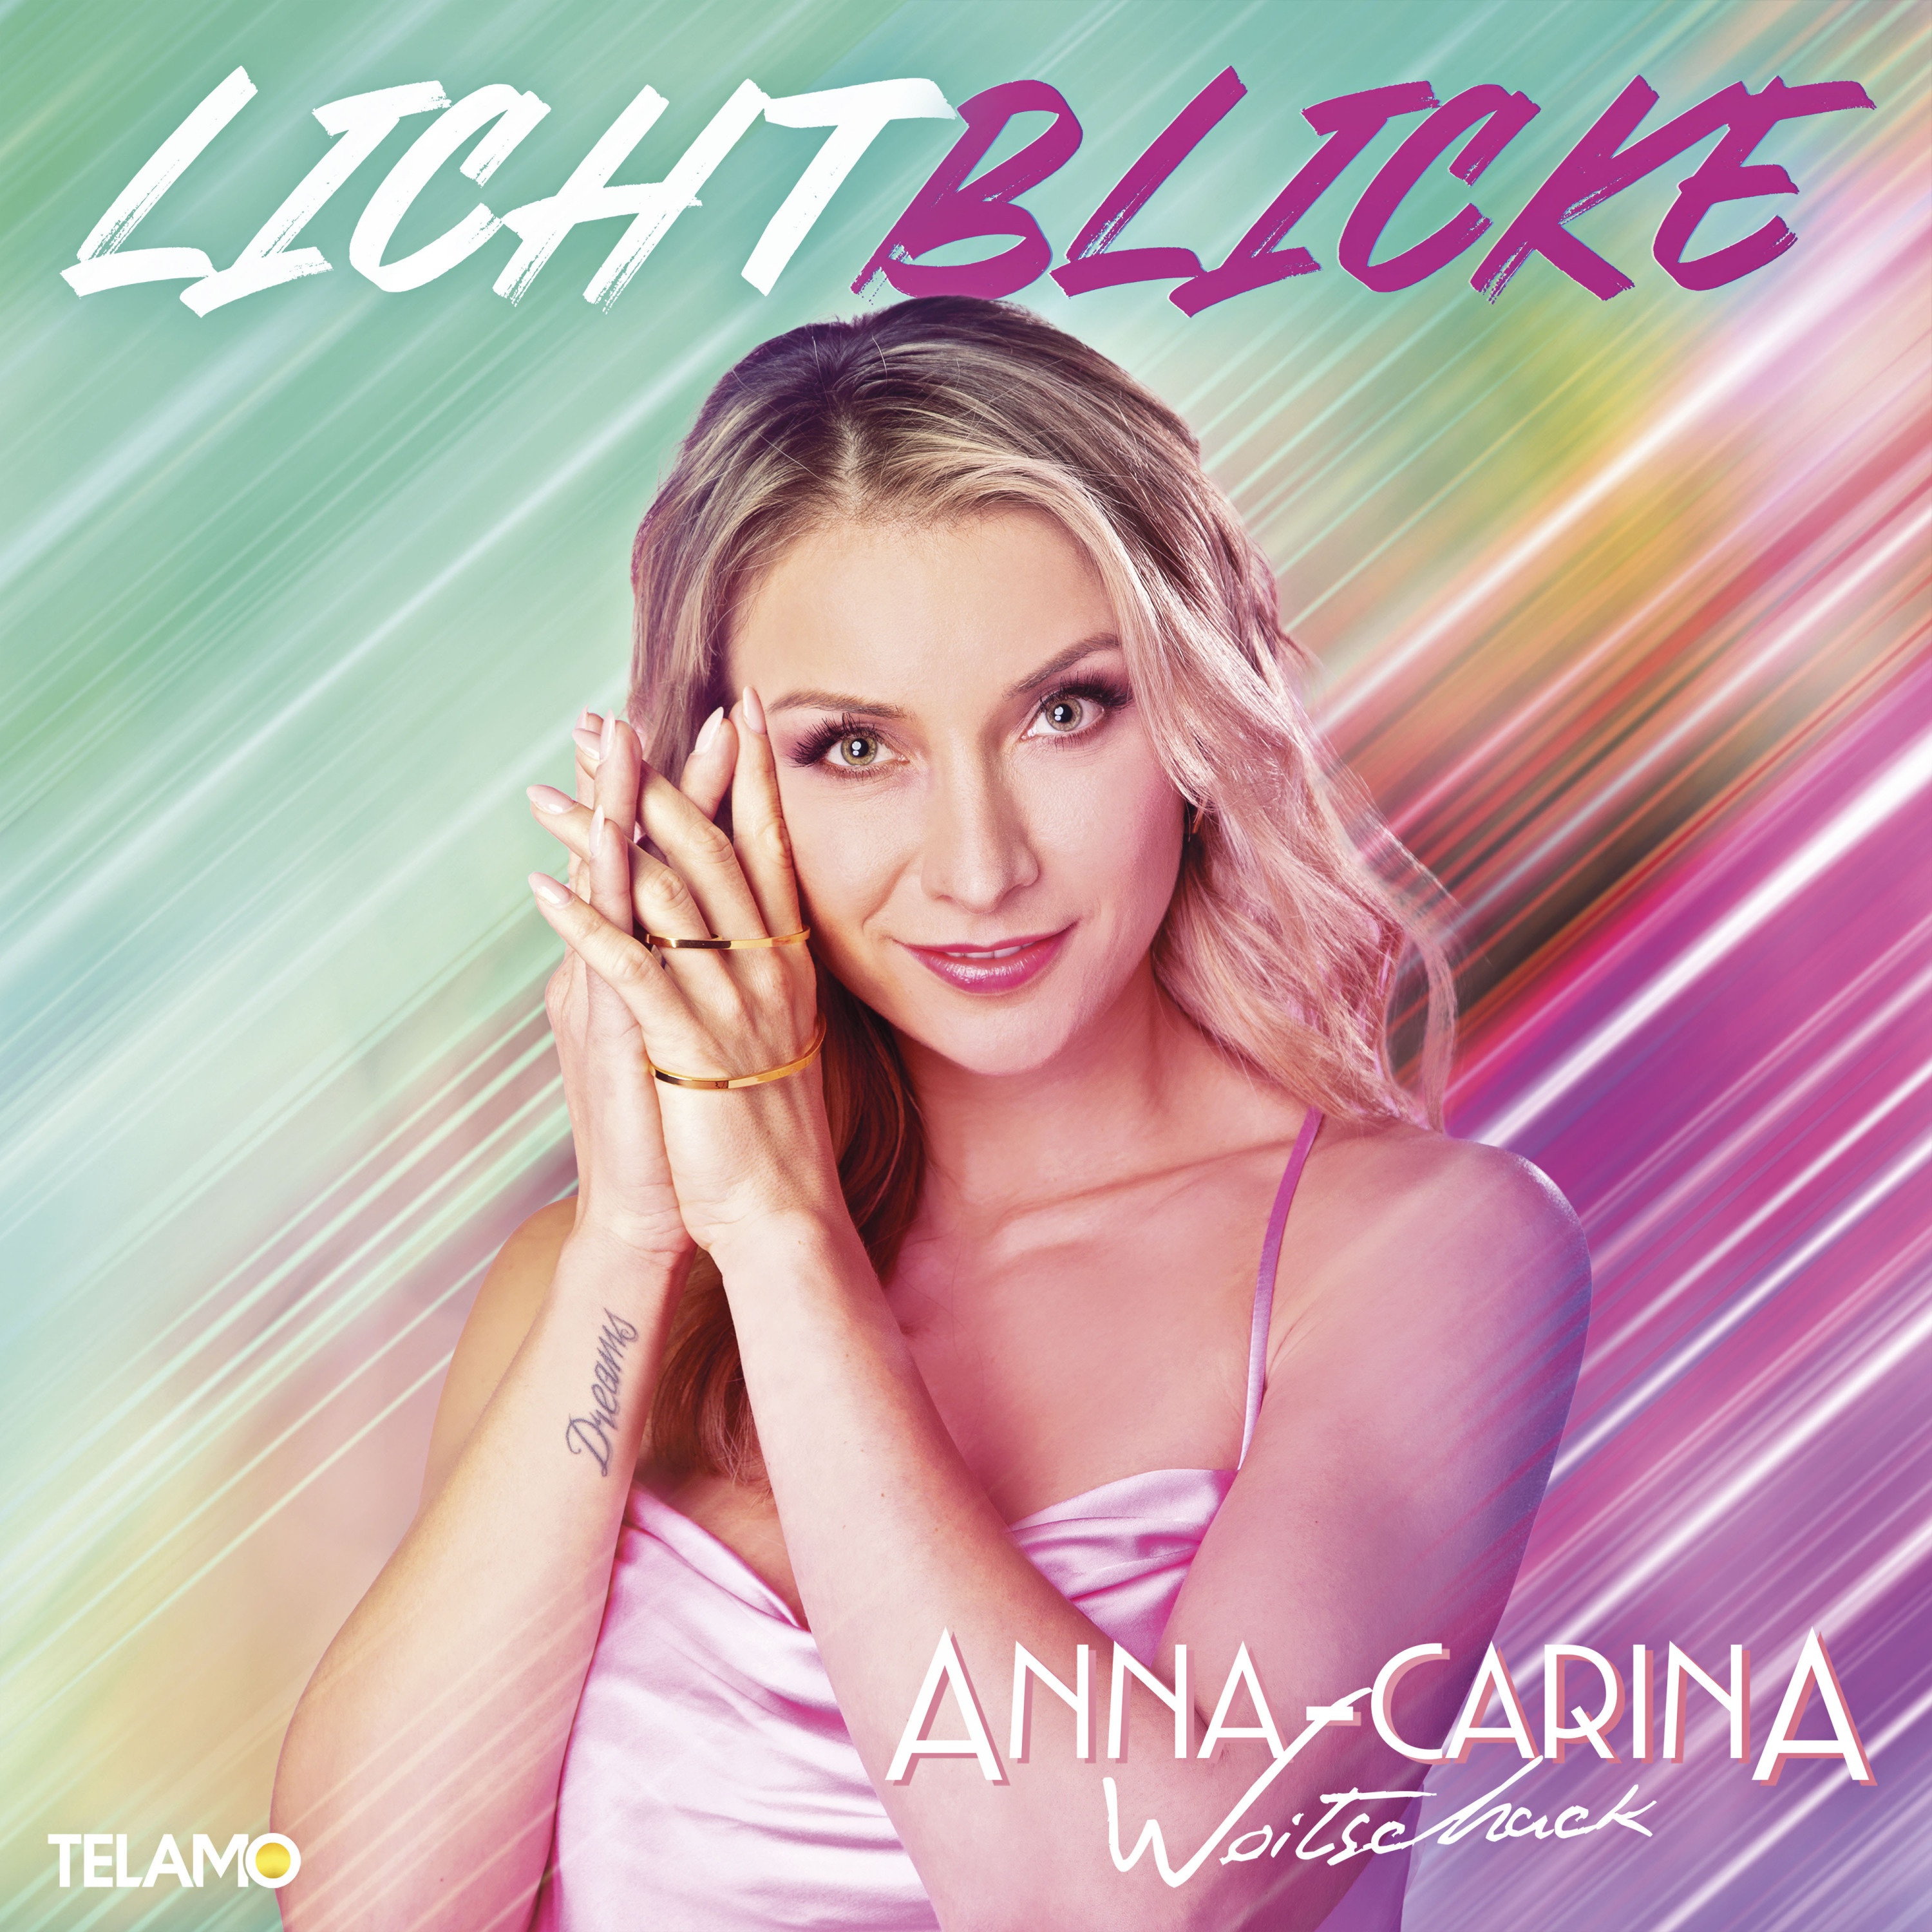 Lichtblicke - Anna-Carina Woitschack. (CD)